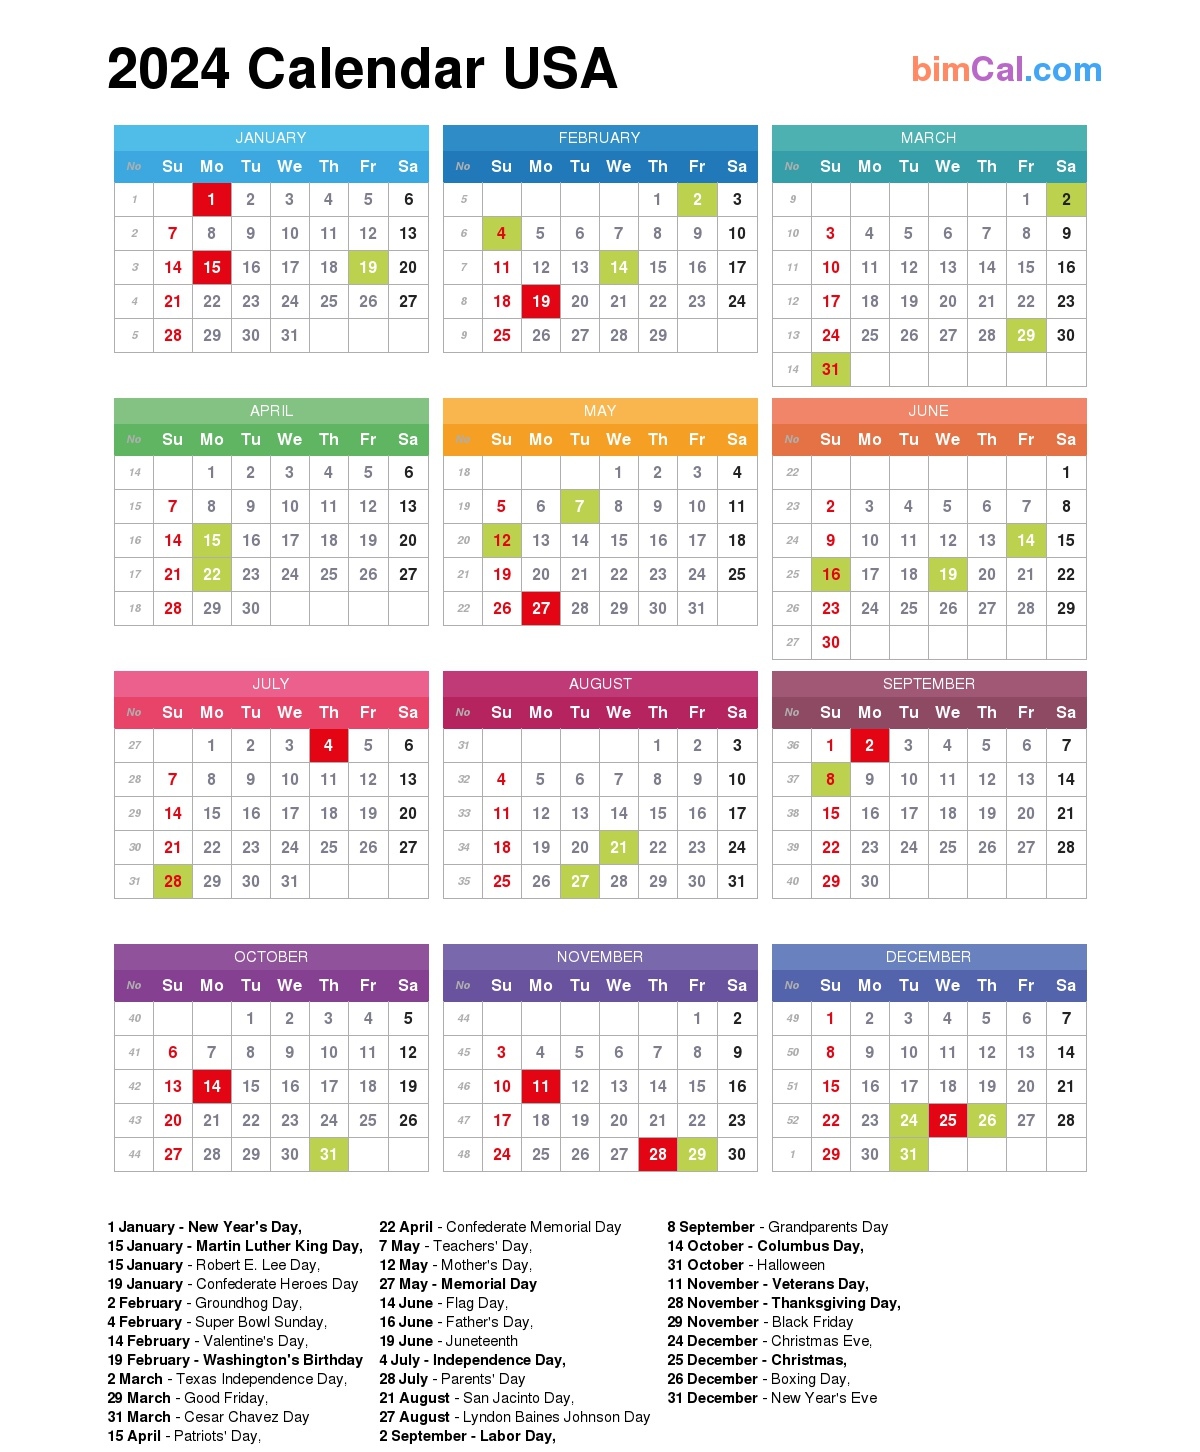 2024 Calendar USA BimCal - Free Printable 2024 Calendar With Holidays And Observances